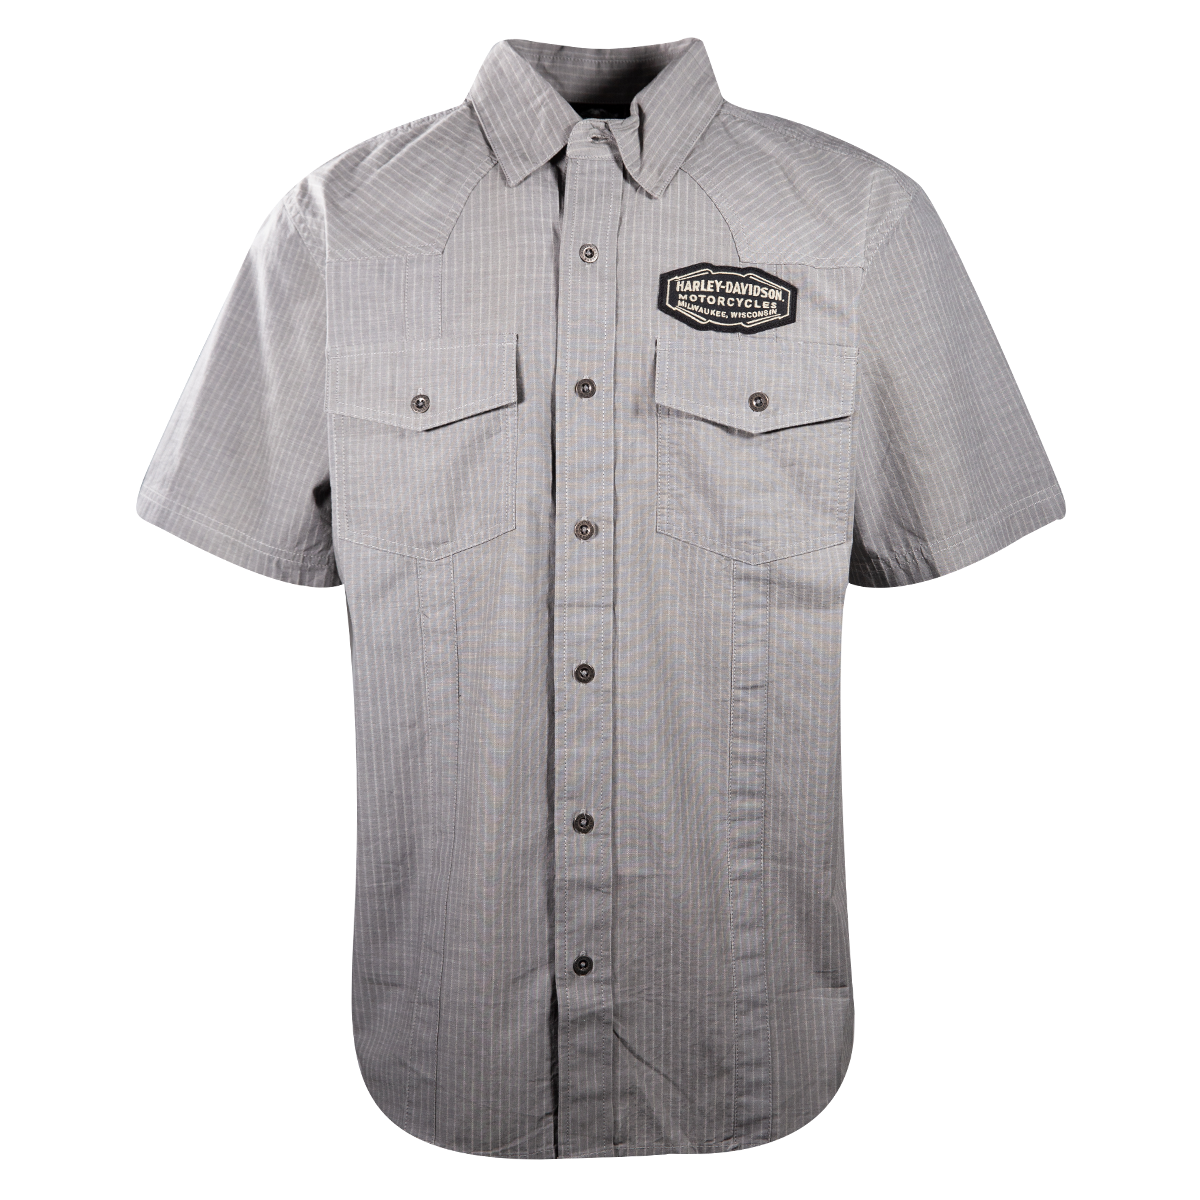 Harley-Davidson Men's Grey Vertical Striped S/S Woven Shirt (S24)